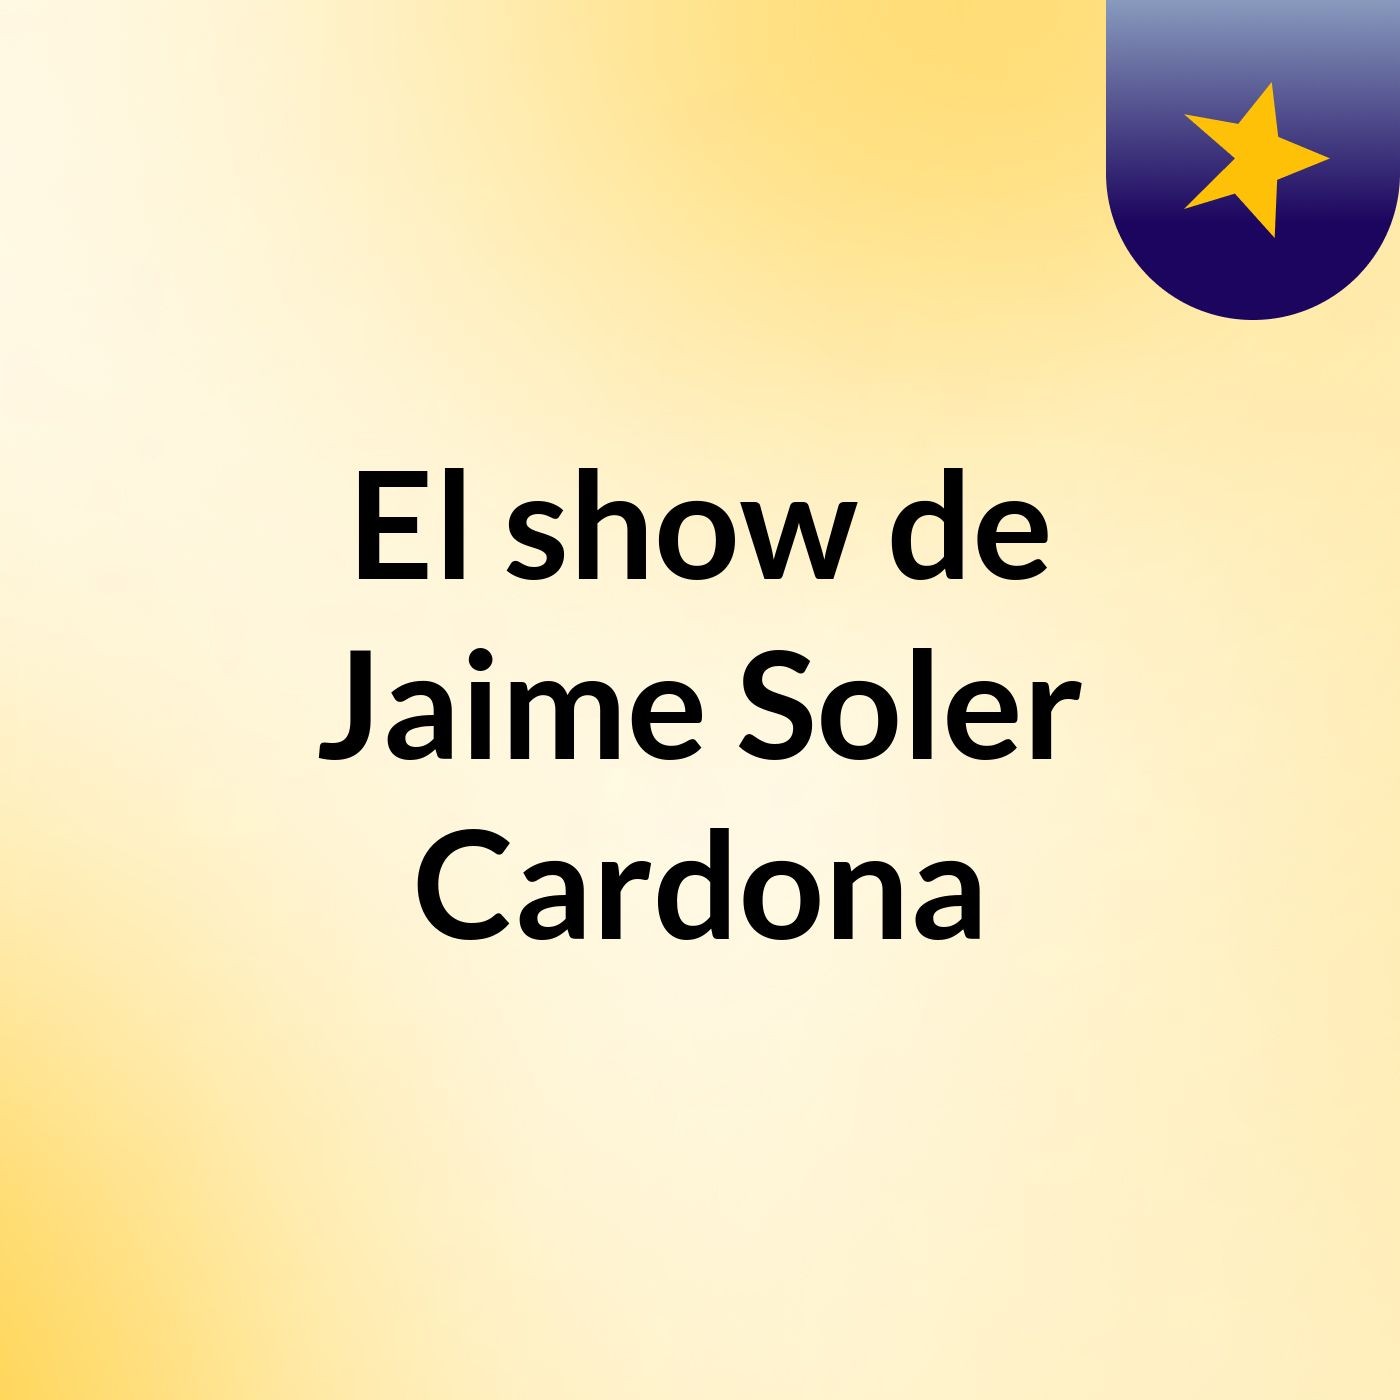 El show de Jaime Soler Cardona